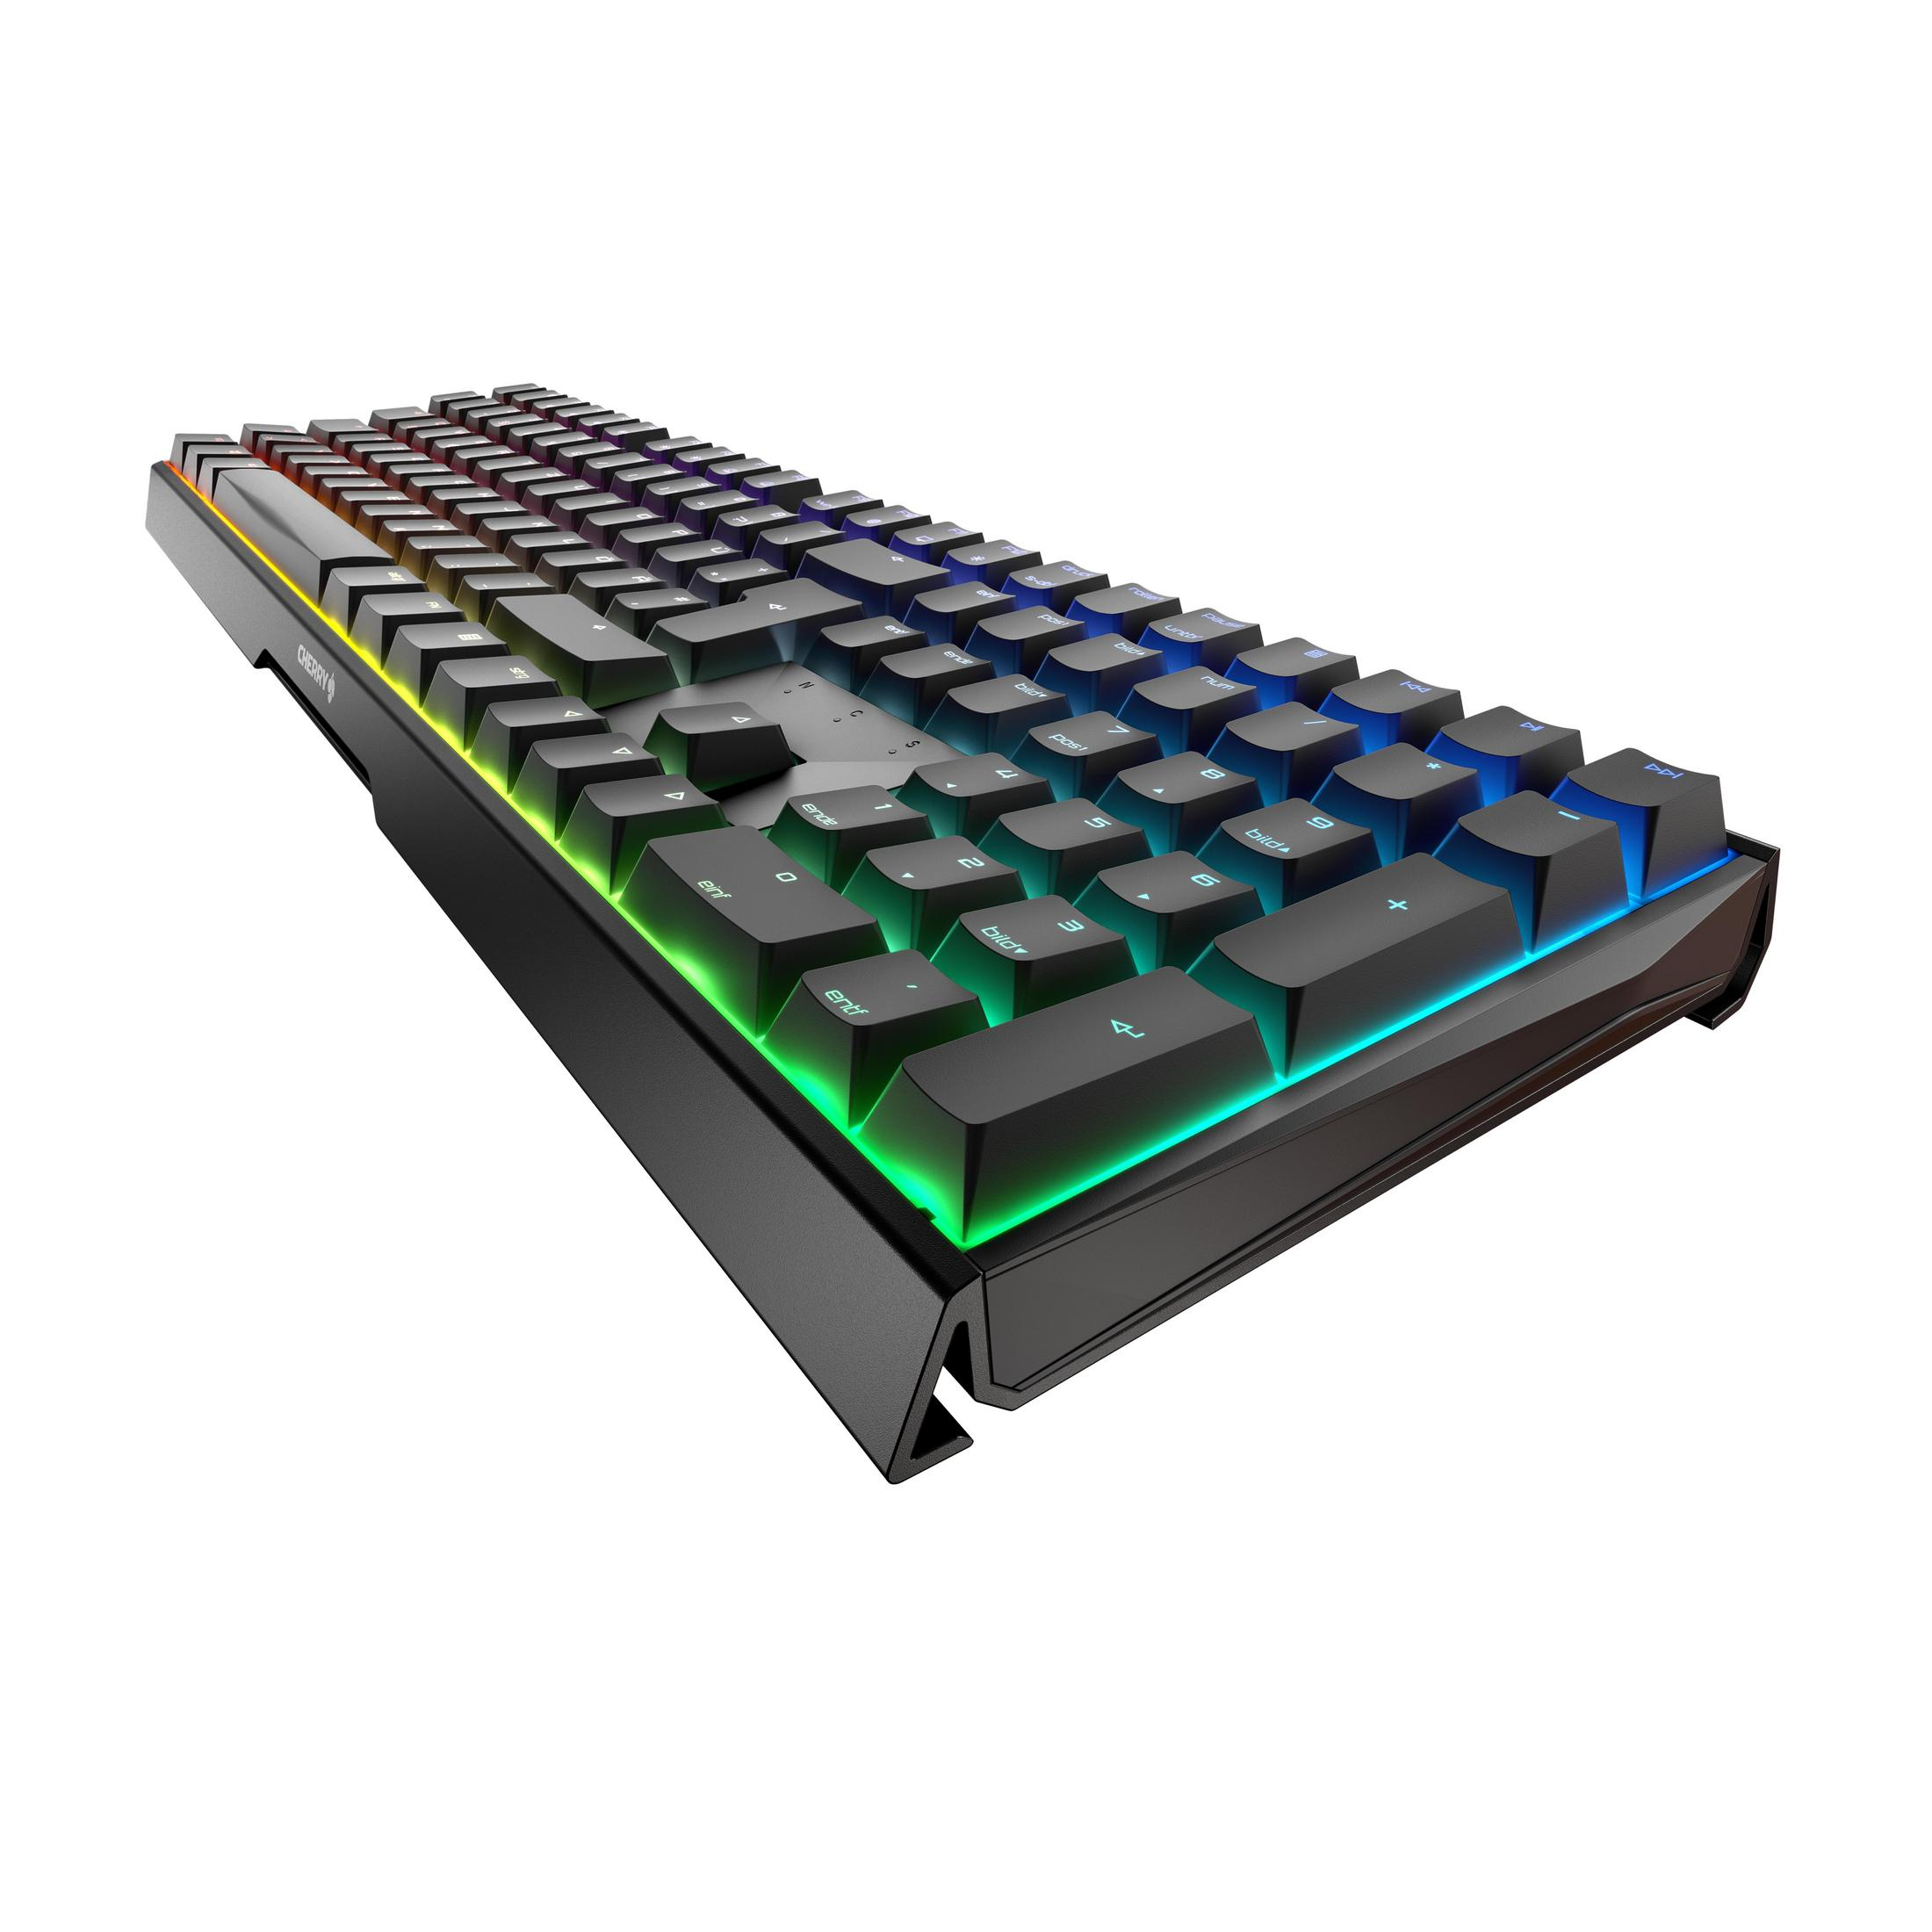 3.0 Tastatur, MX Cherry MX S, G80-3874LXADE-2 Mechanisch, BOARD CHERRY Gaming Brown